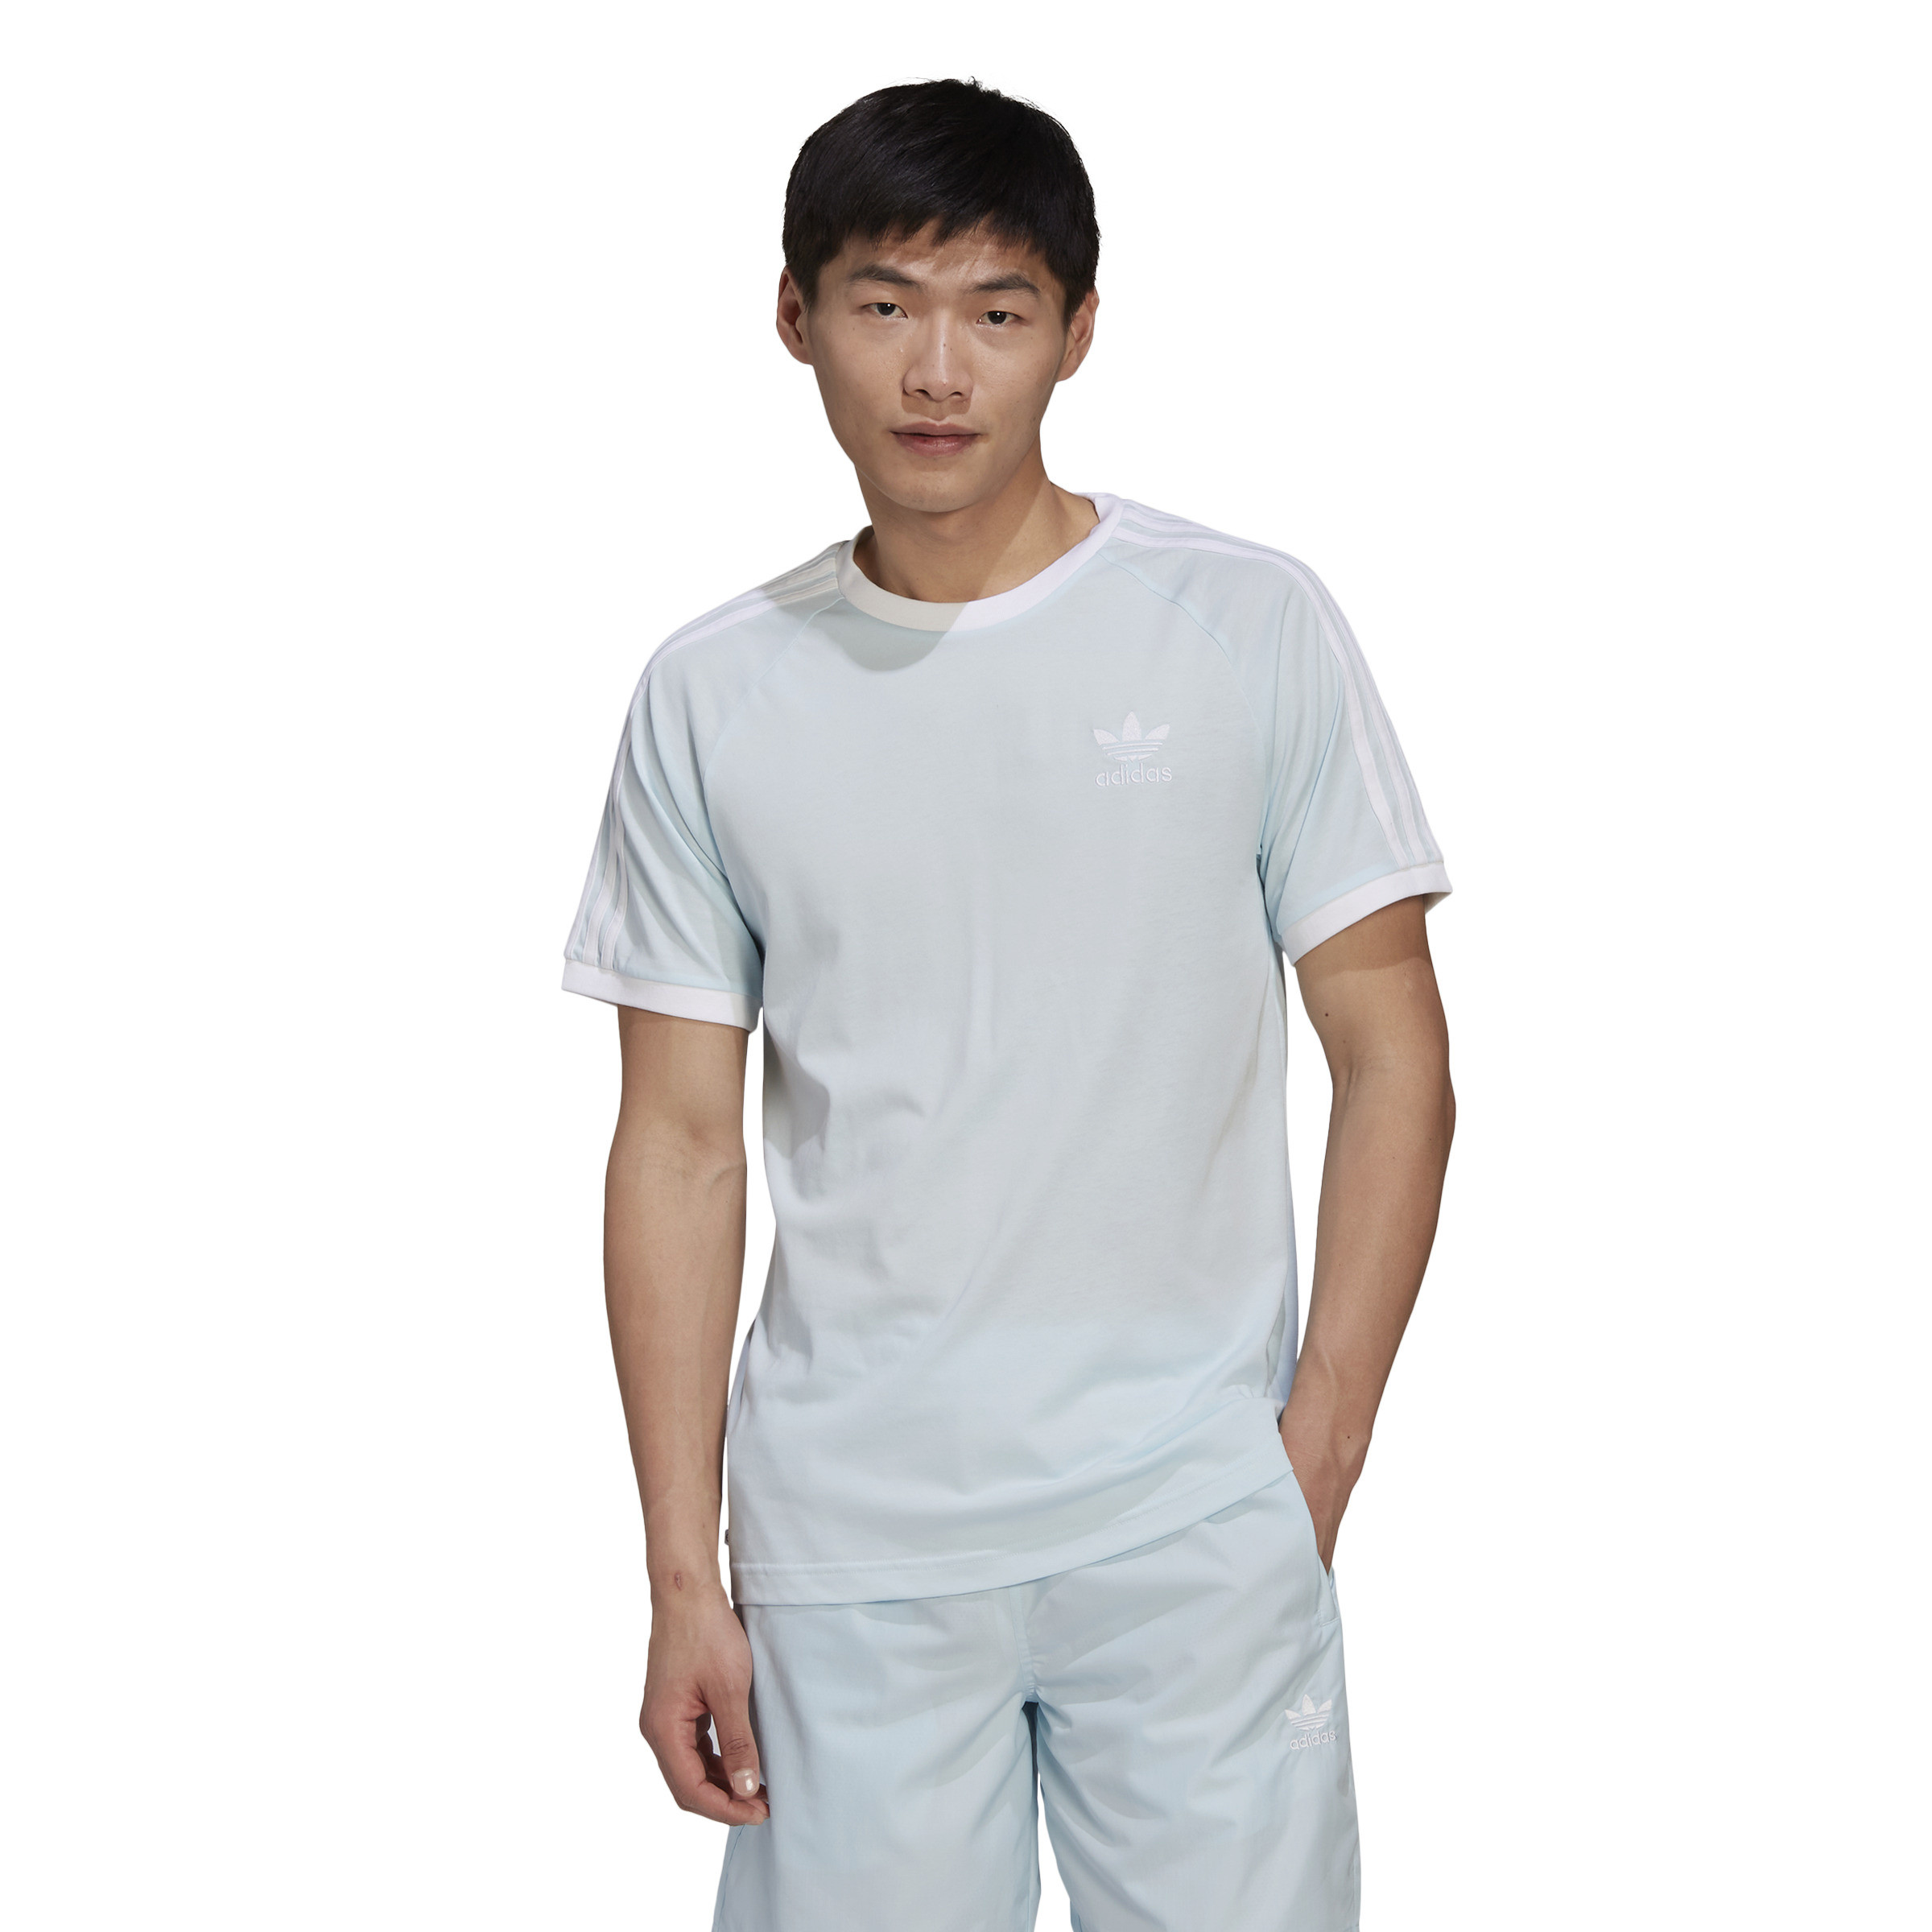 Adidas - T-shirt adicolor, Light Blue, large image number 1